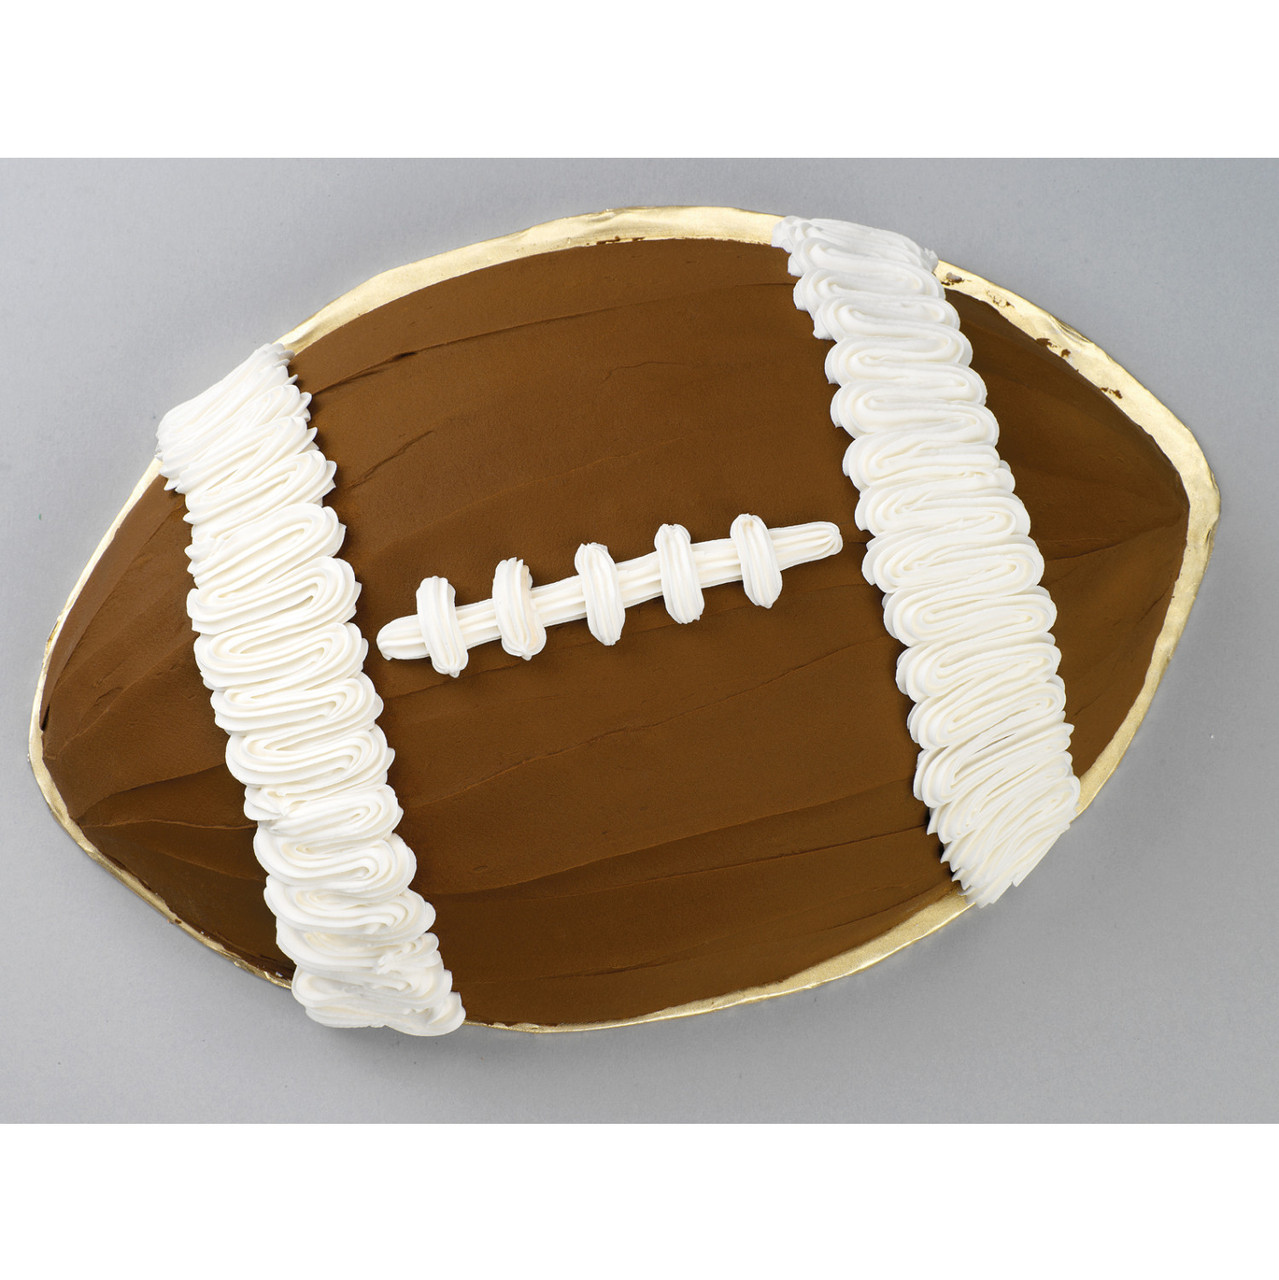 Best Football Cake Recipe - How To Make Football Cake